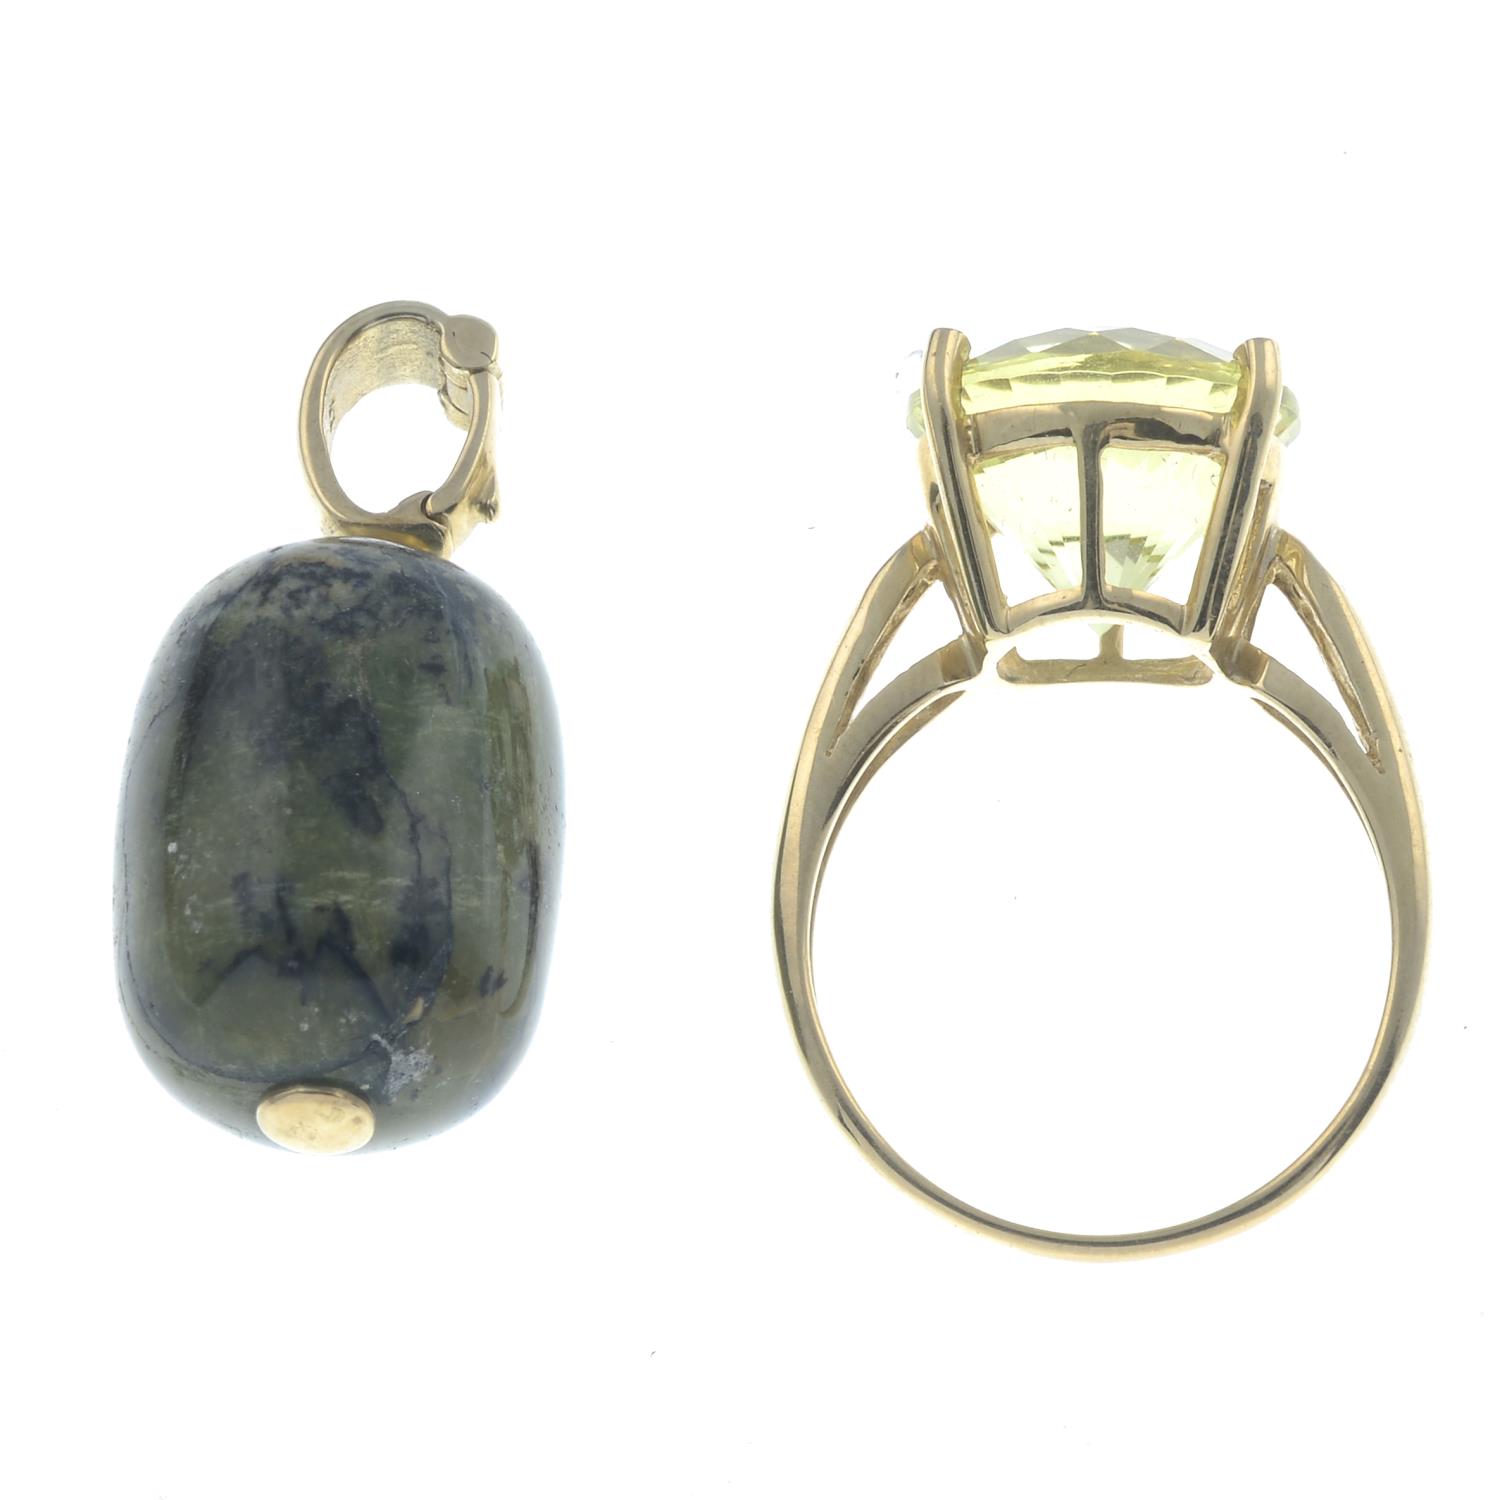 Paste dress ring, stamped 375, ring size N, 3.7gms. - Image 2 of 2